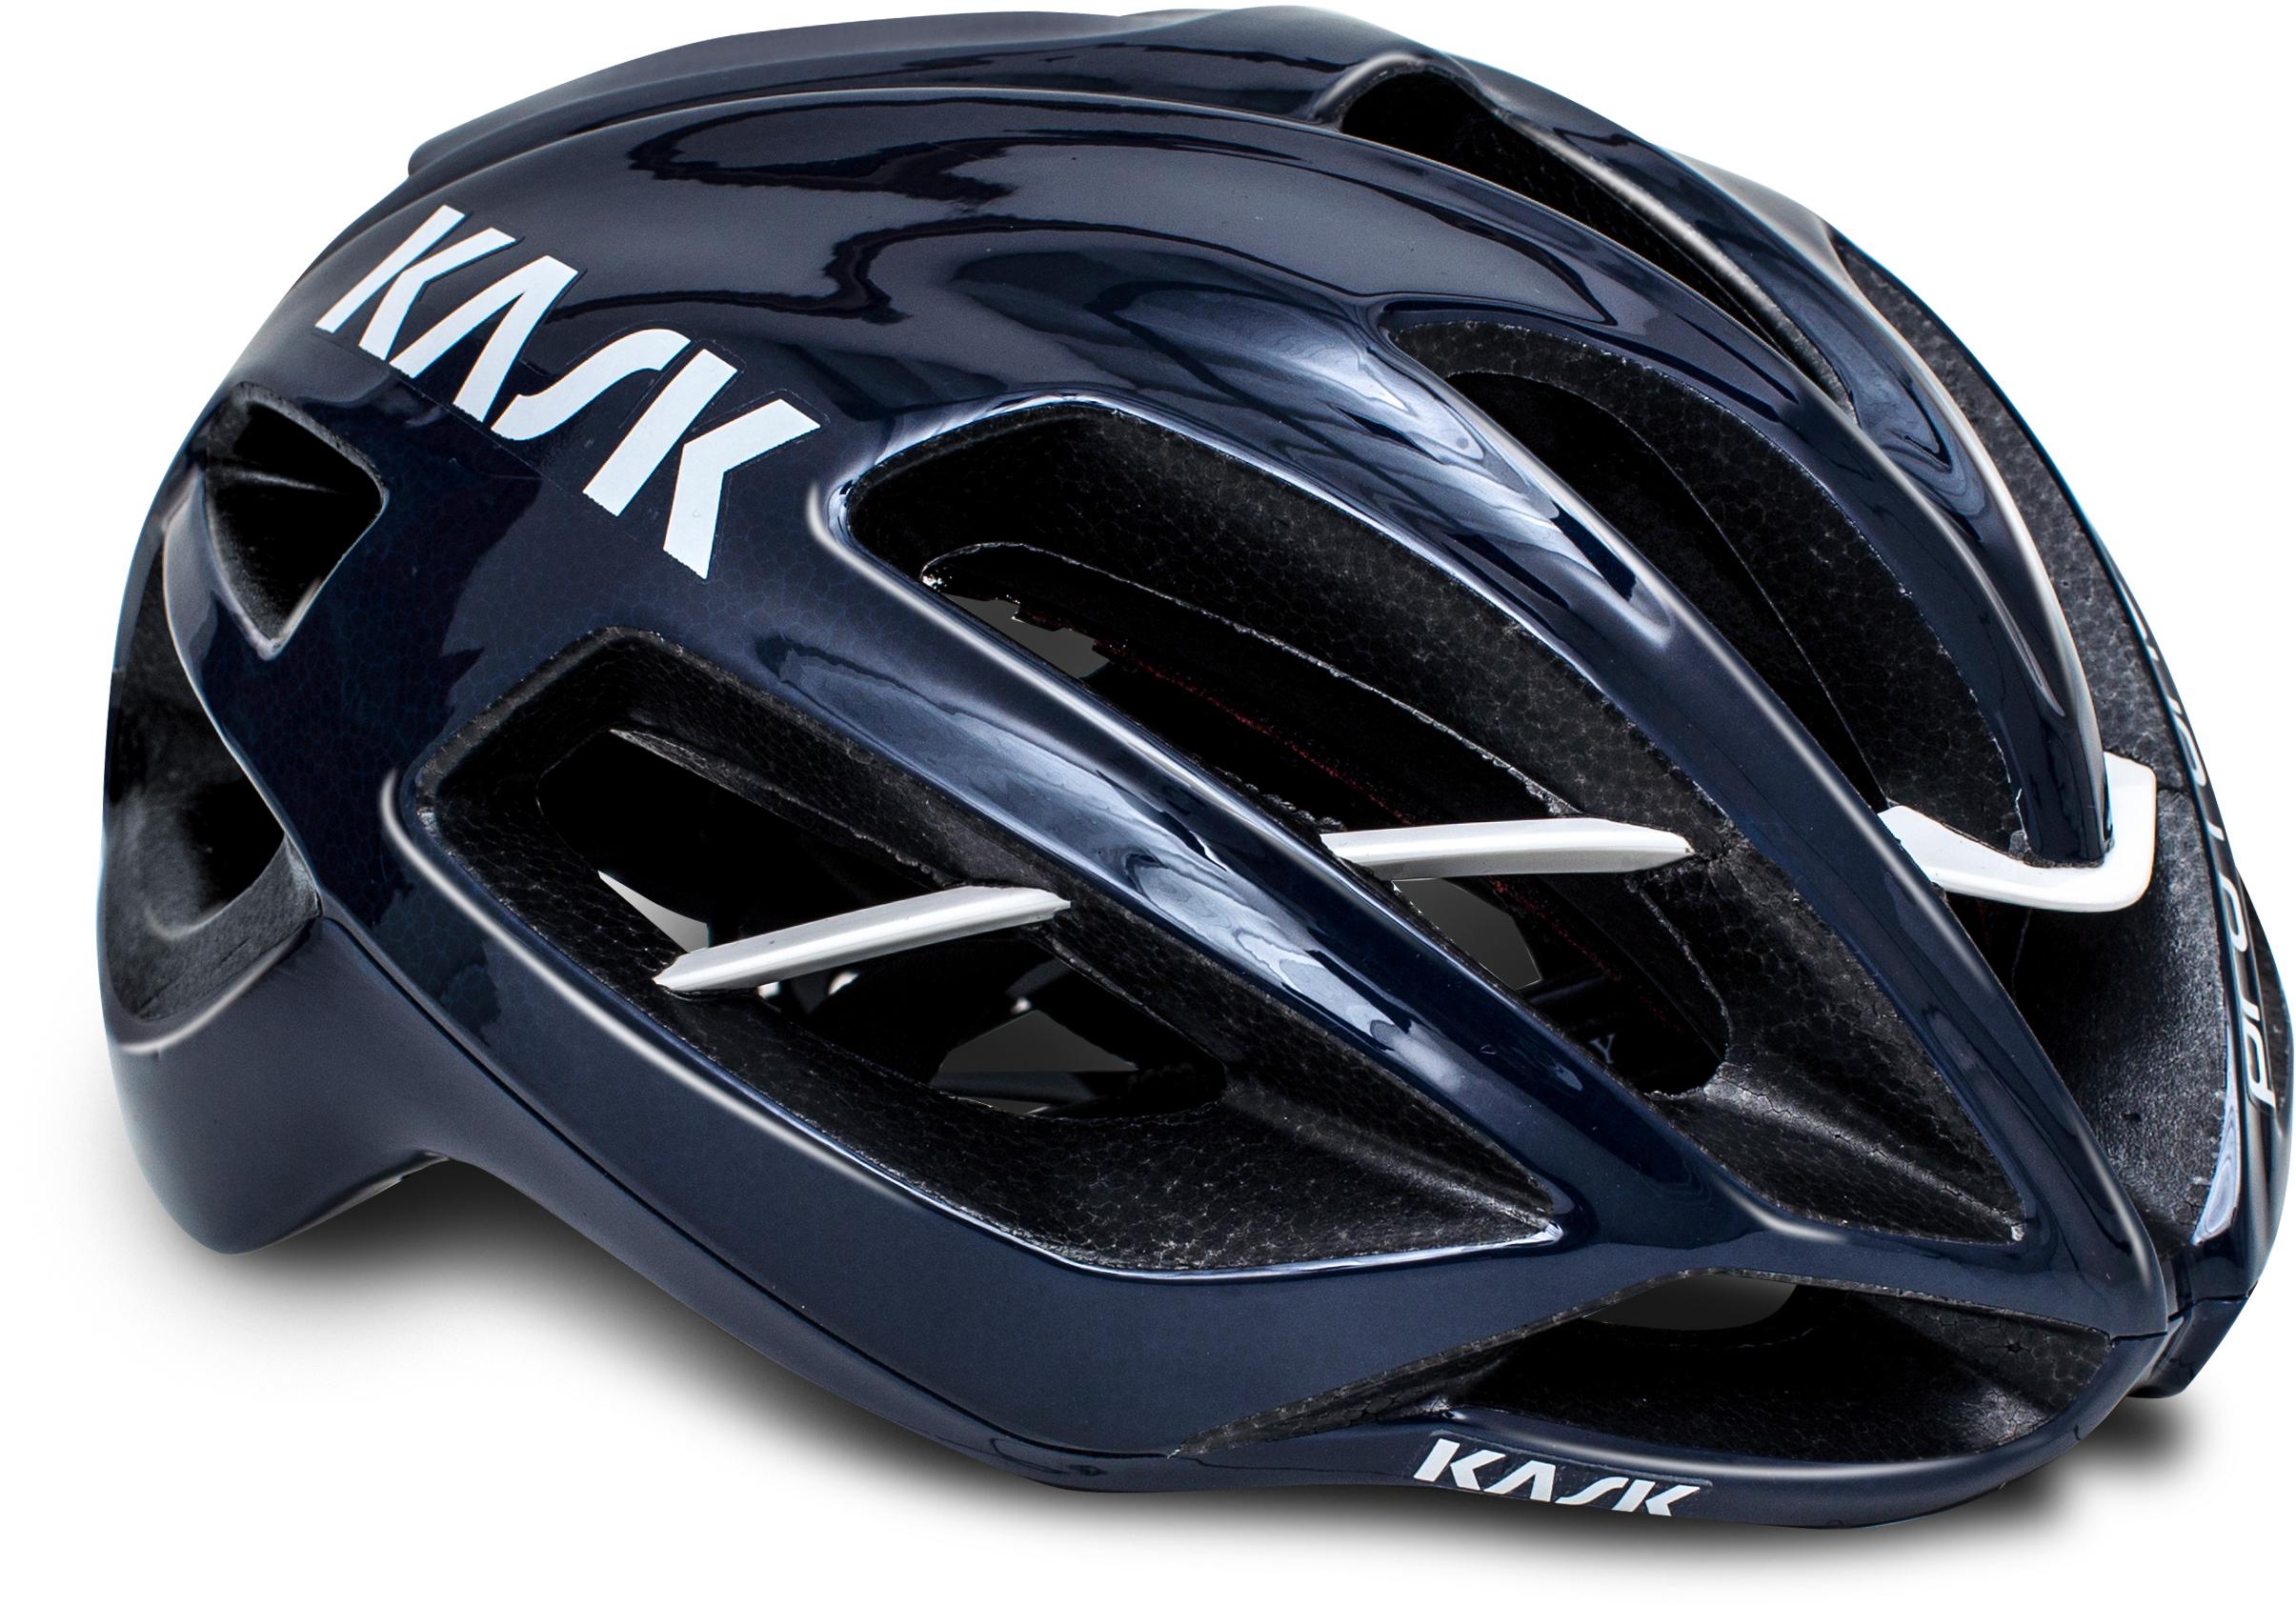 Kask Protone Wg11 Road Helmet, Matt Dark Blue, Large